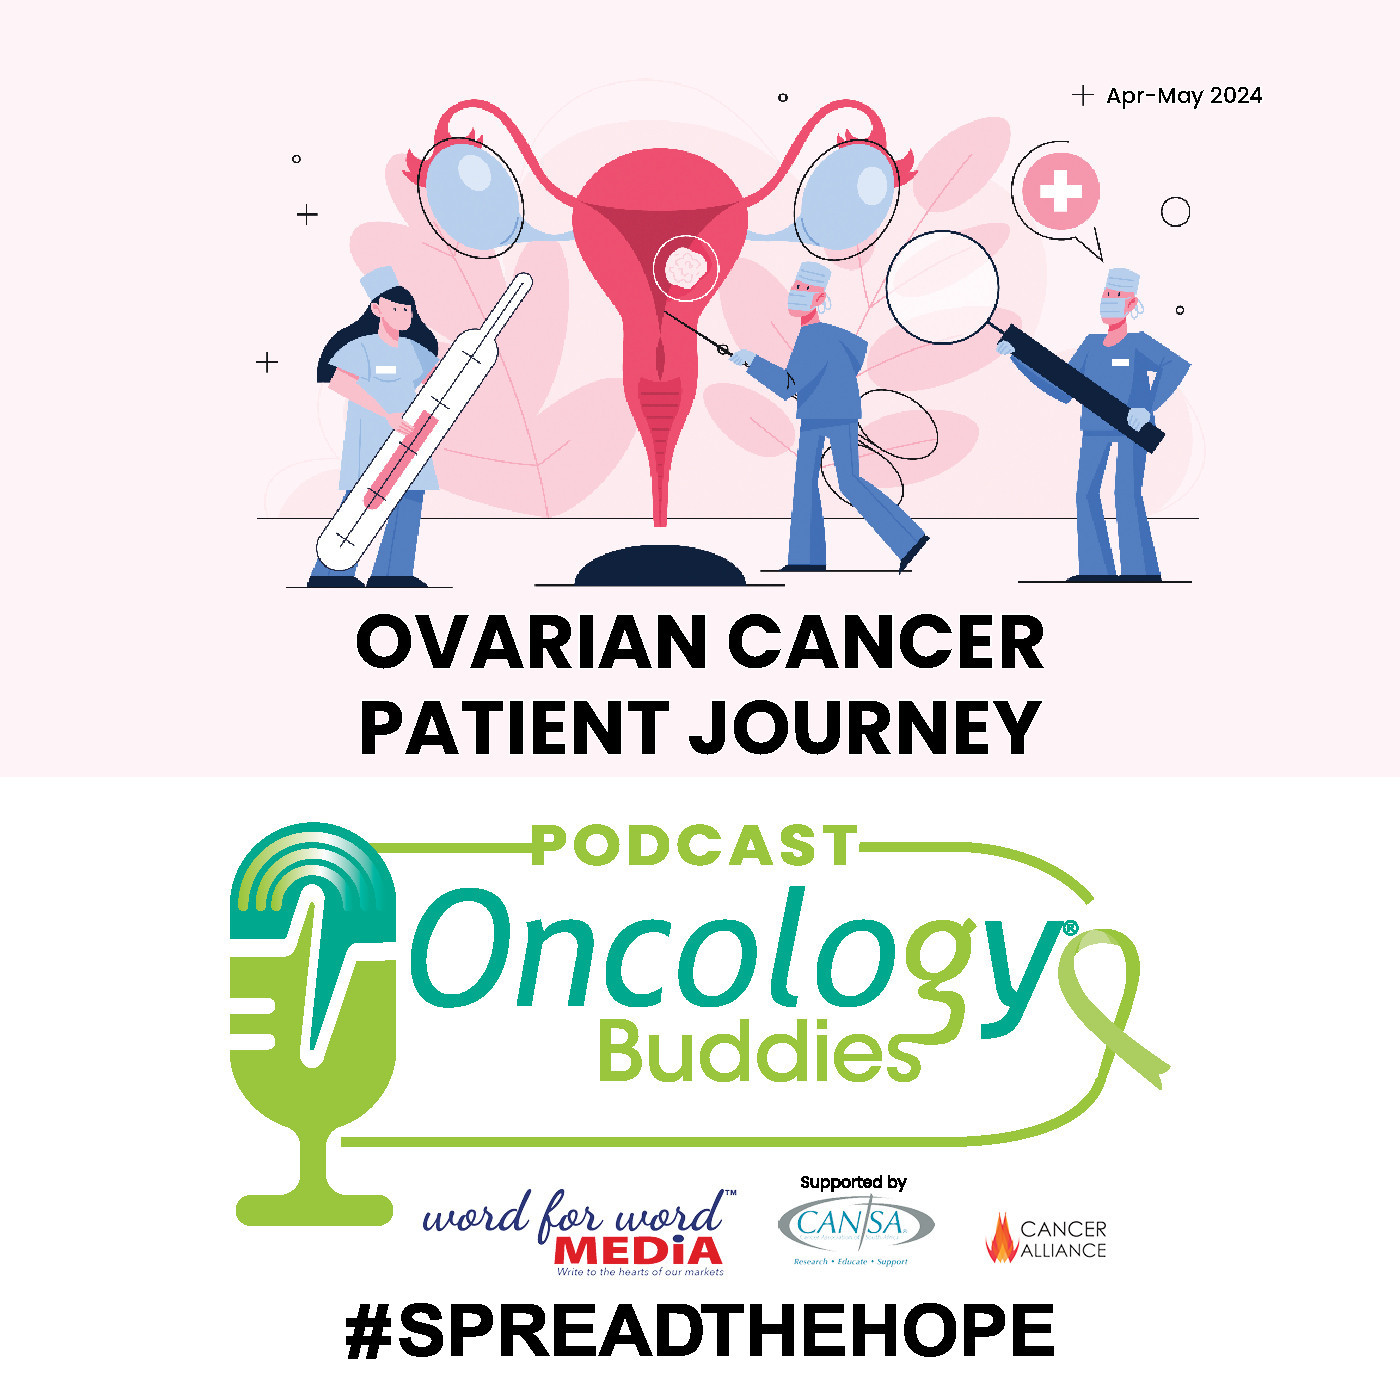 Ovarian cancer patient journey